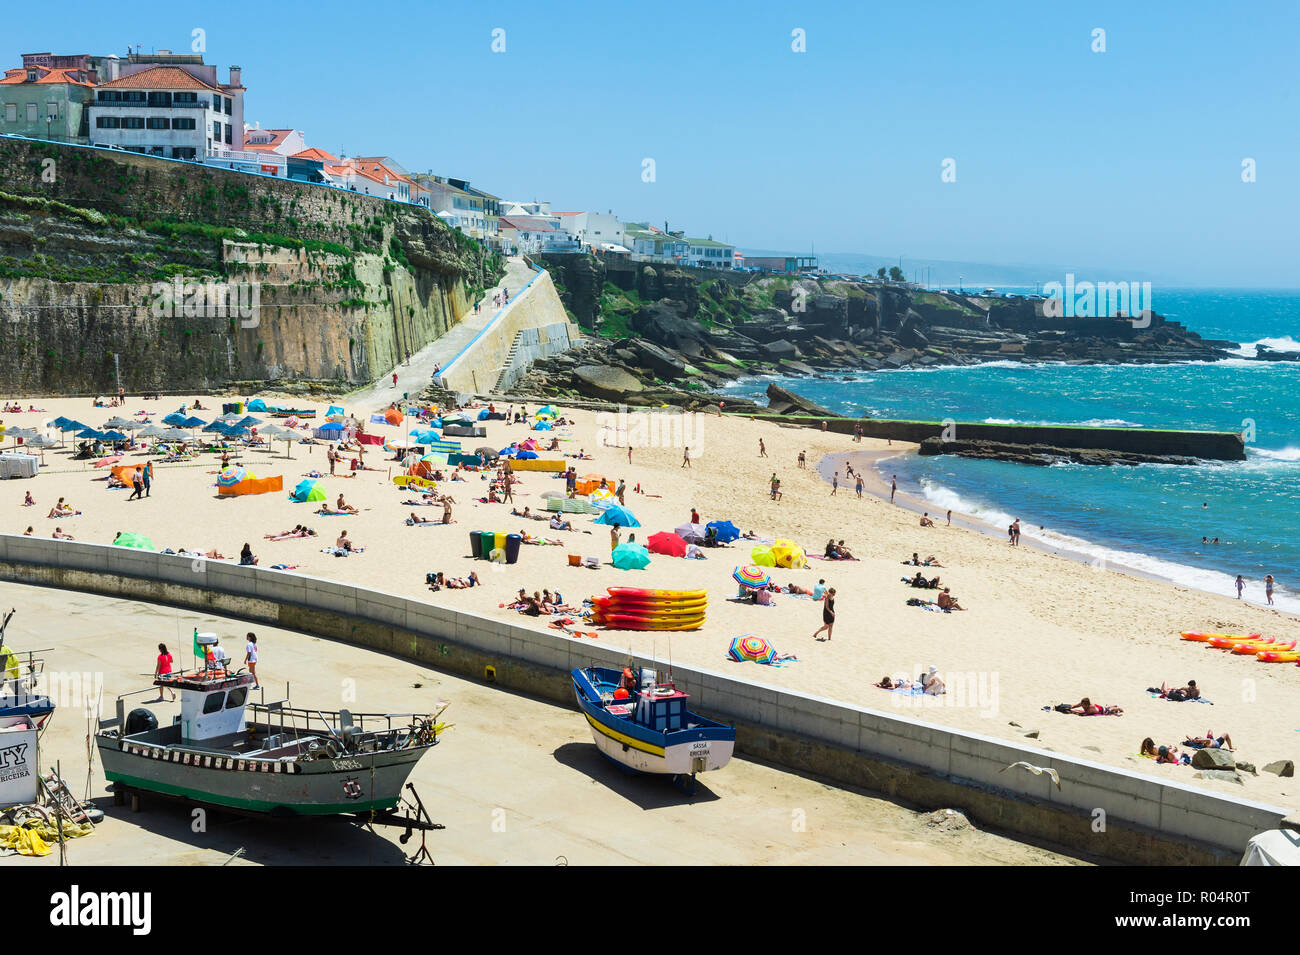 Praia dos Pescadores (Fishermen's Beach), Ericeira, Lisbon Coast, Portugal, Europe Stock Photo